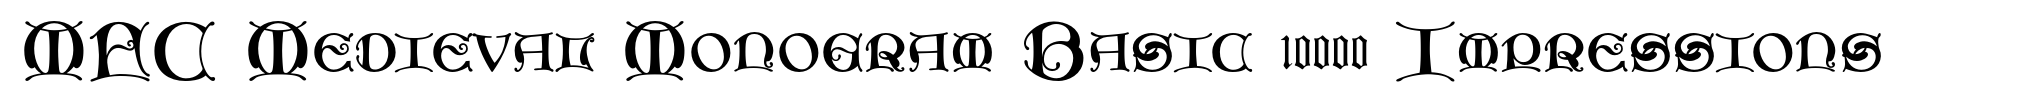 MFC Medieval Monogram Basic 10000 Impressions image